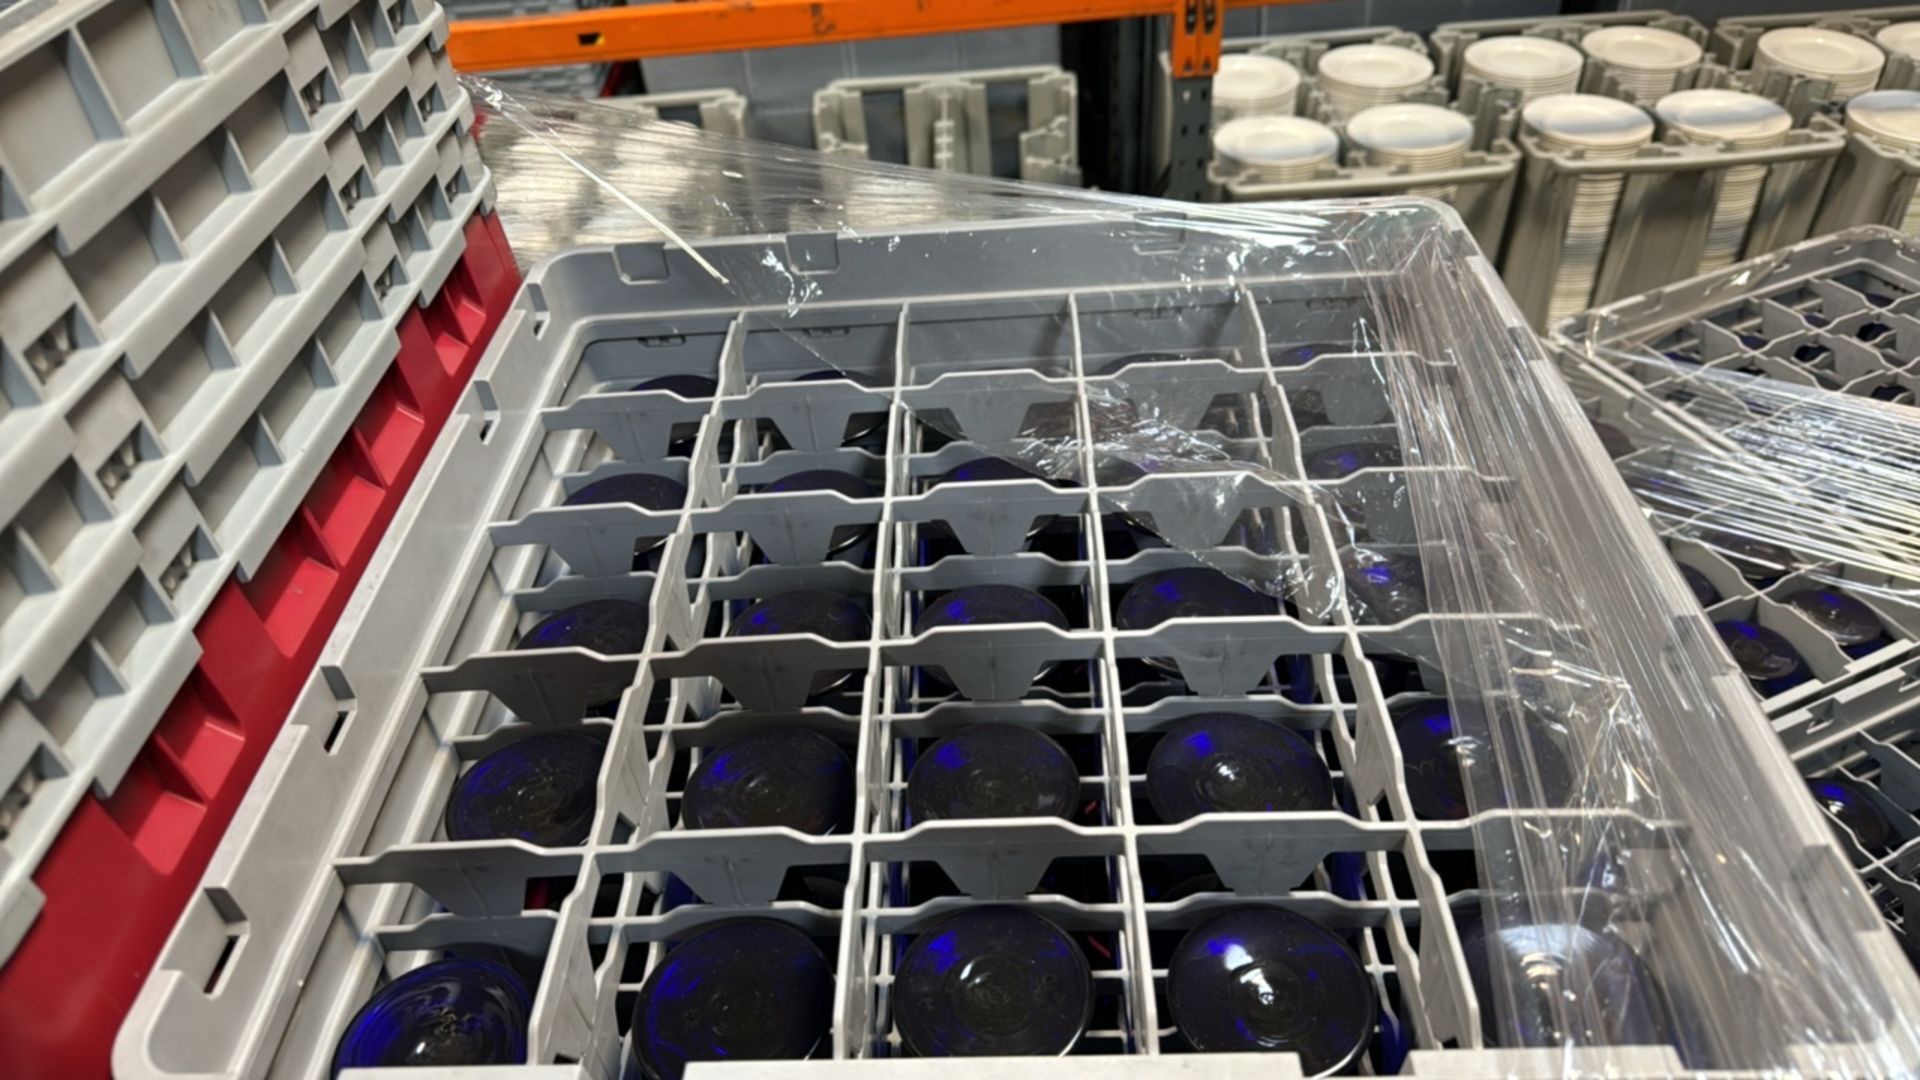 Pallet of Blue 75cl Wine Glasses - Image 4 of 4